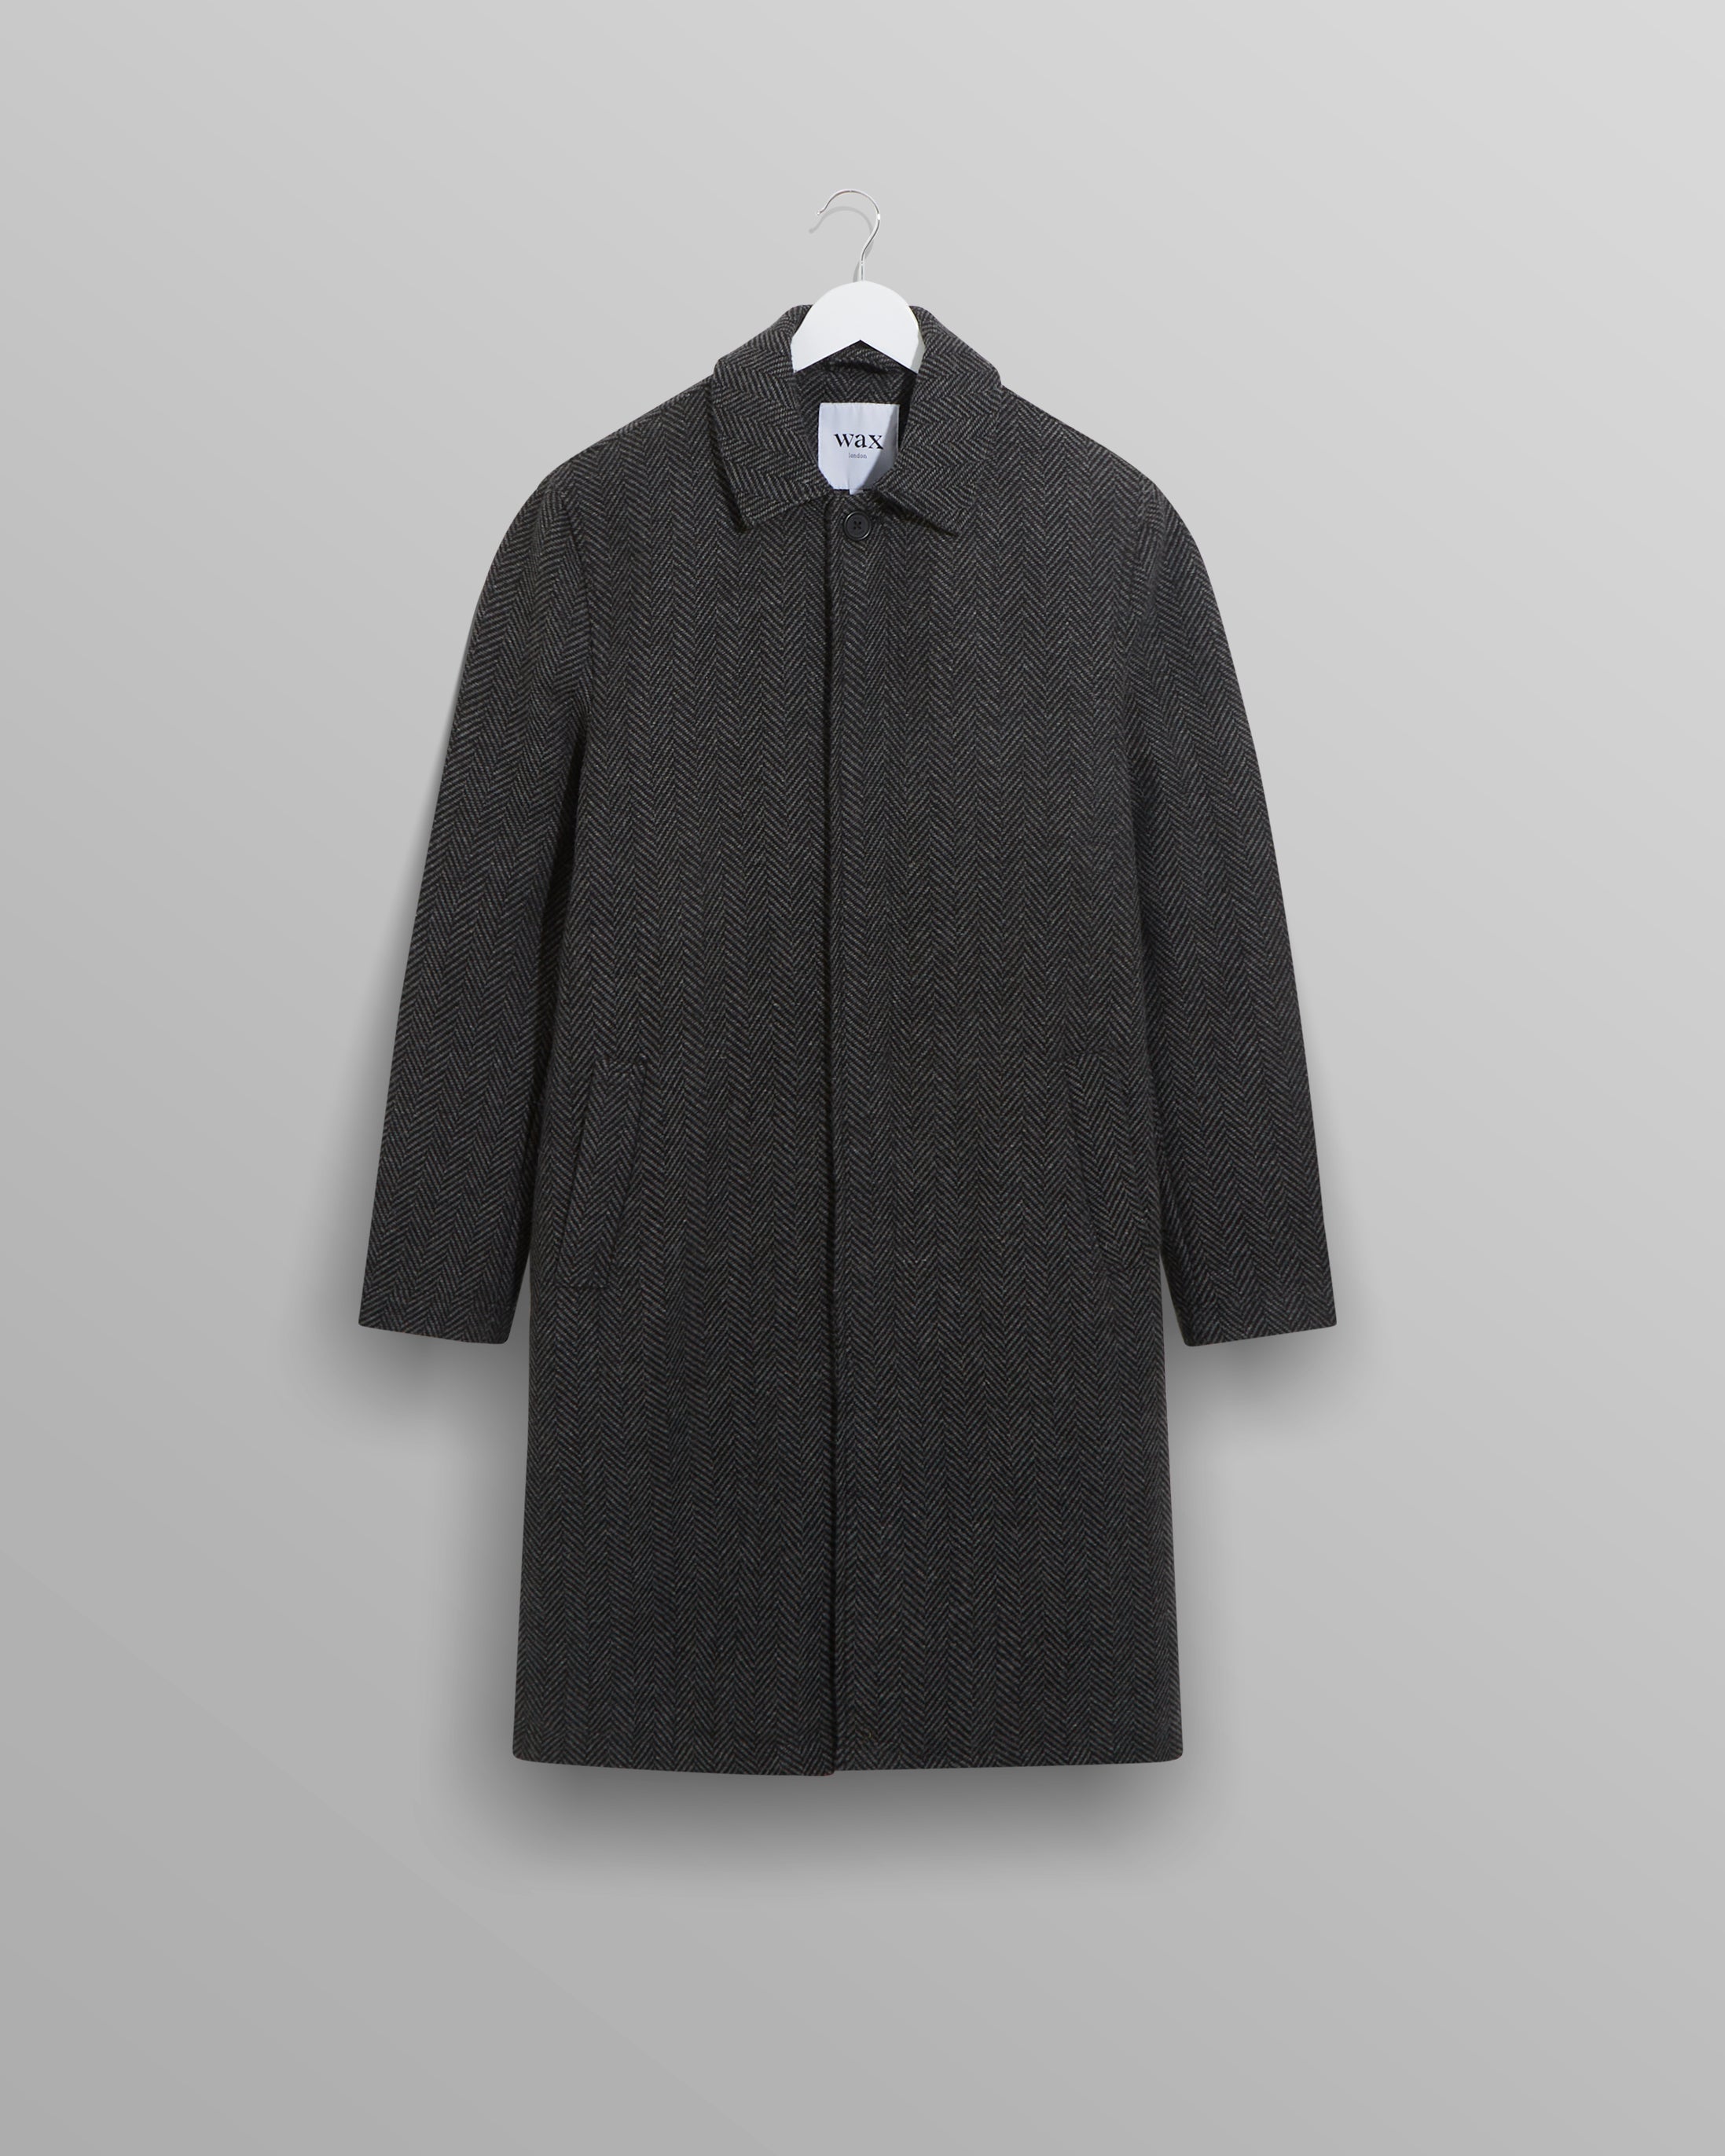 Chester Coat Black/Grey Herringbone | Wax London